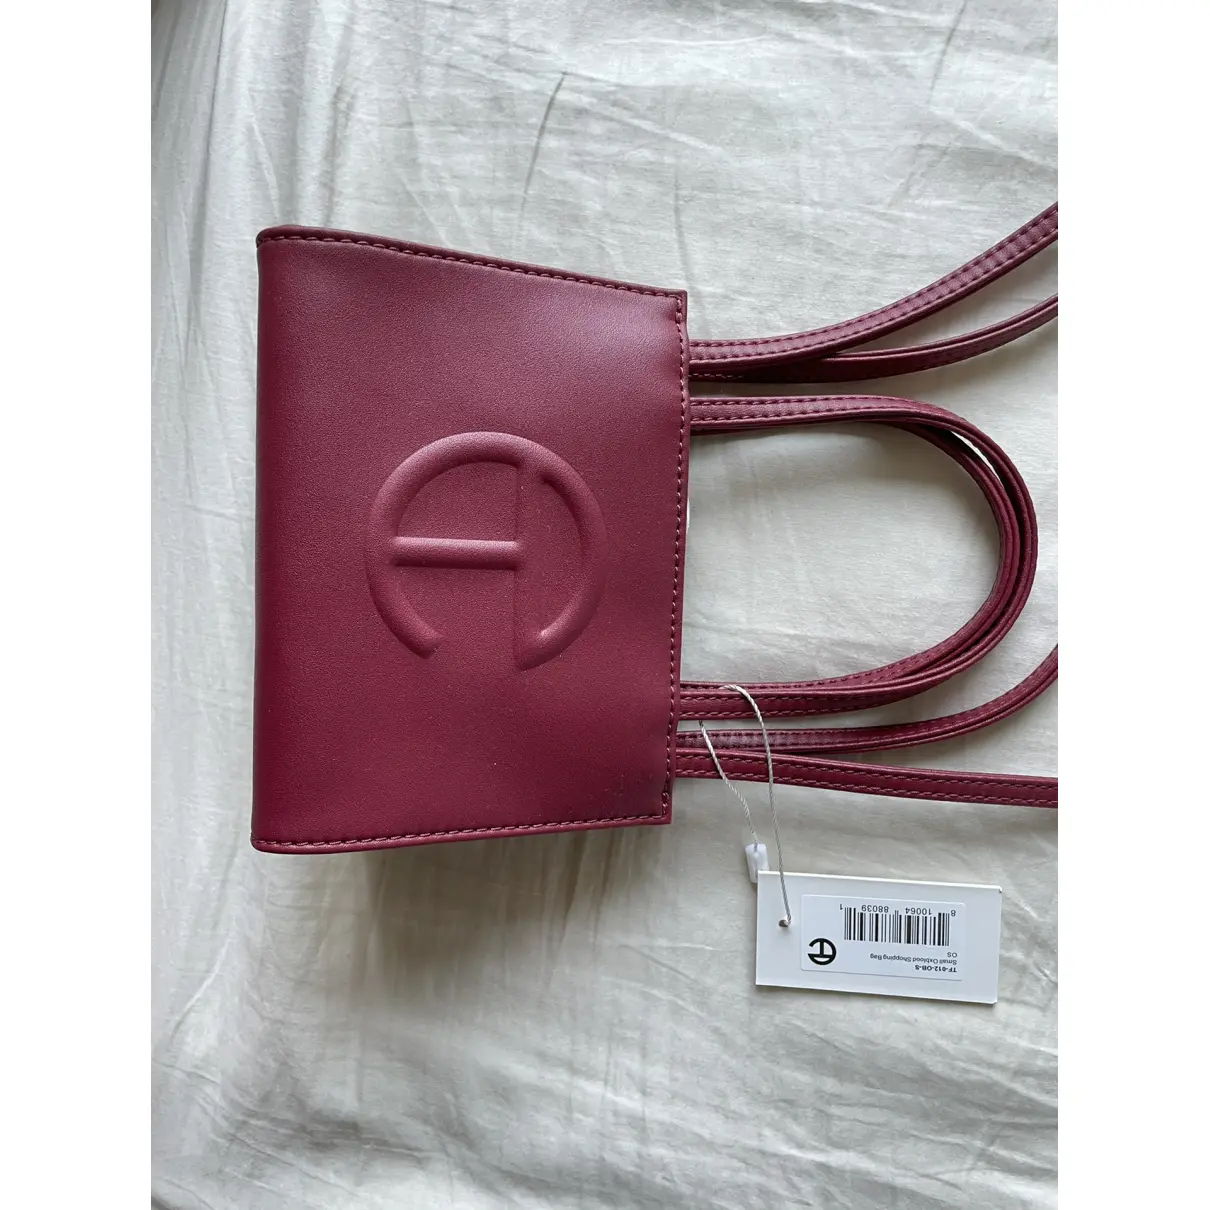 Buy Telfar Small Shopping Bag vegan leather tote online